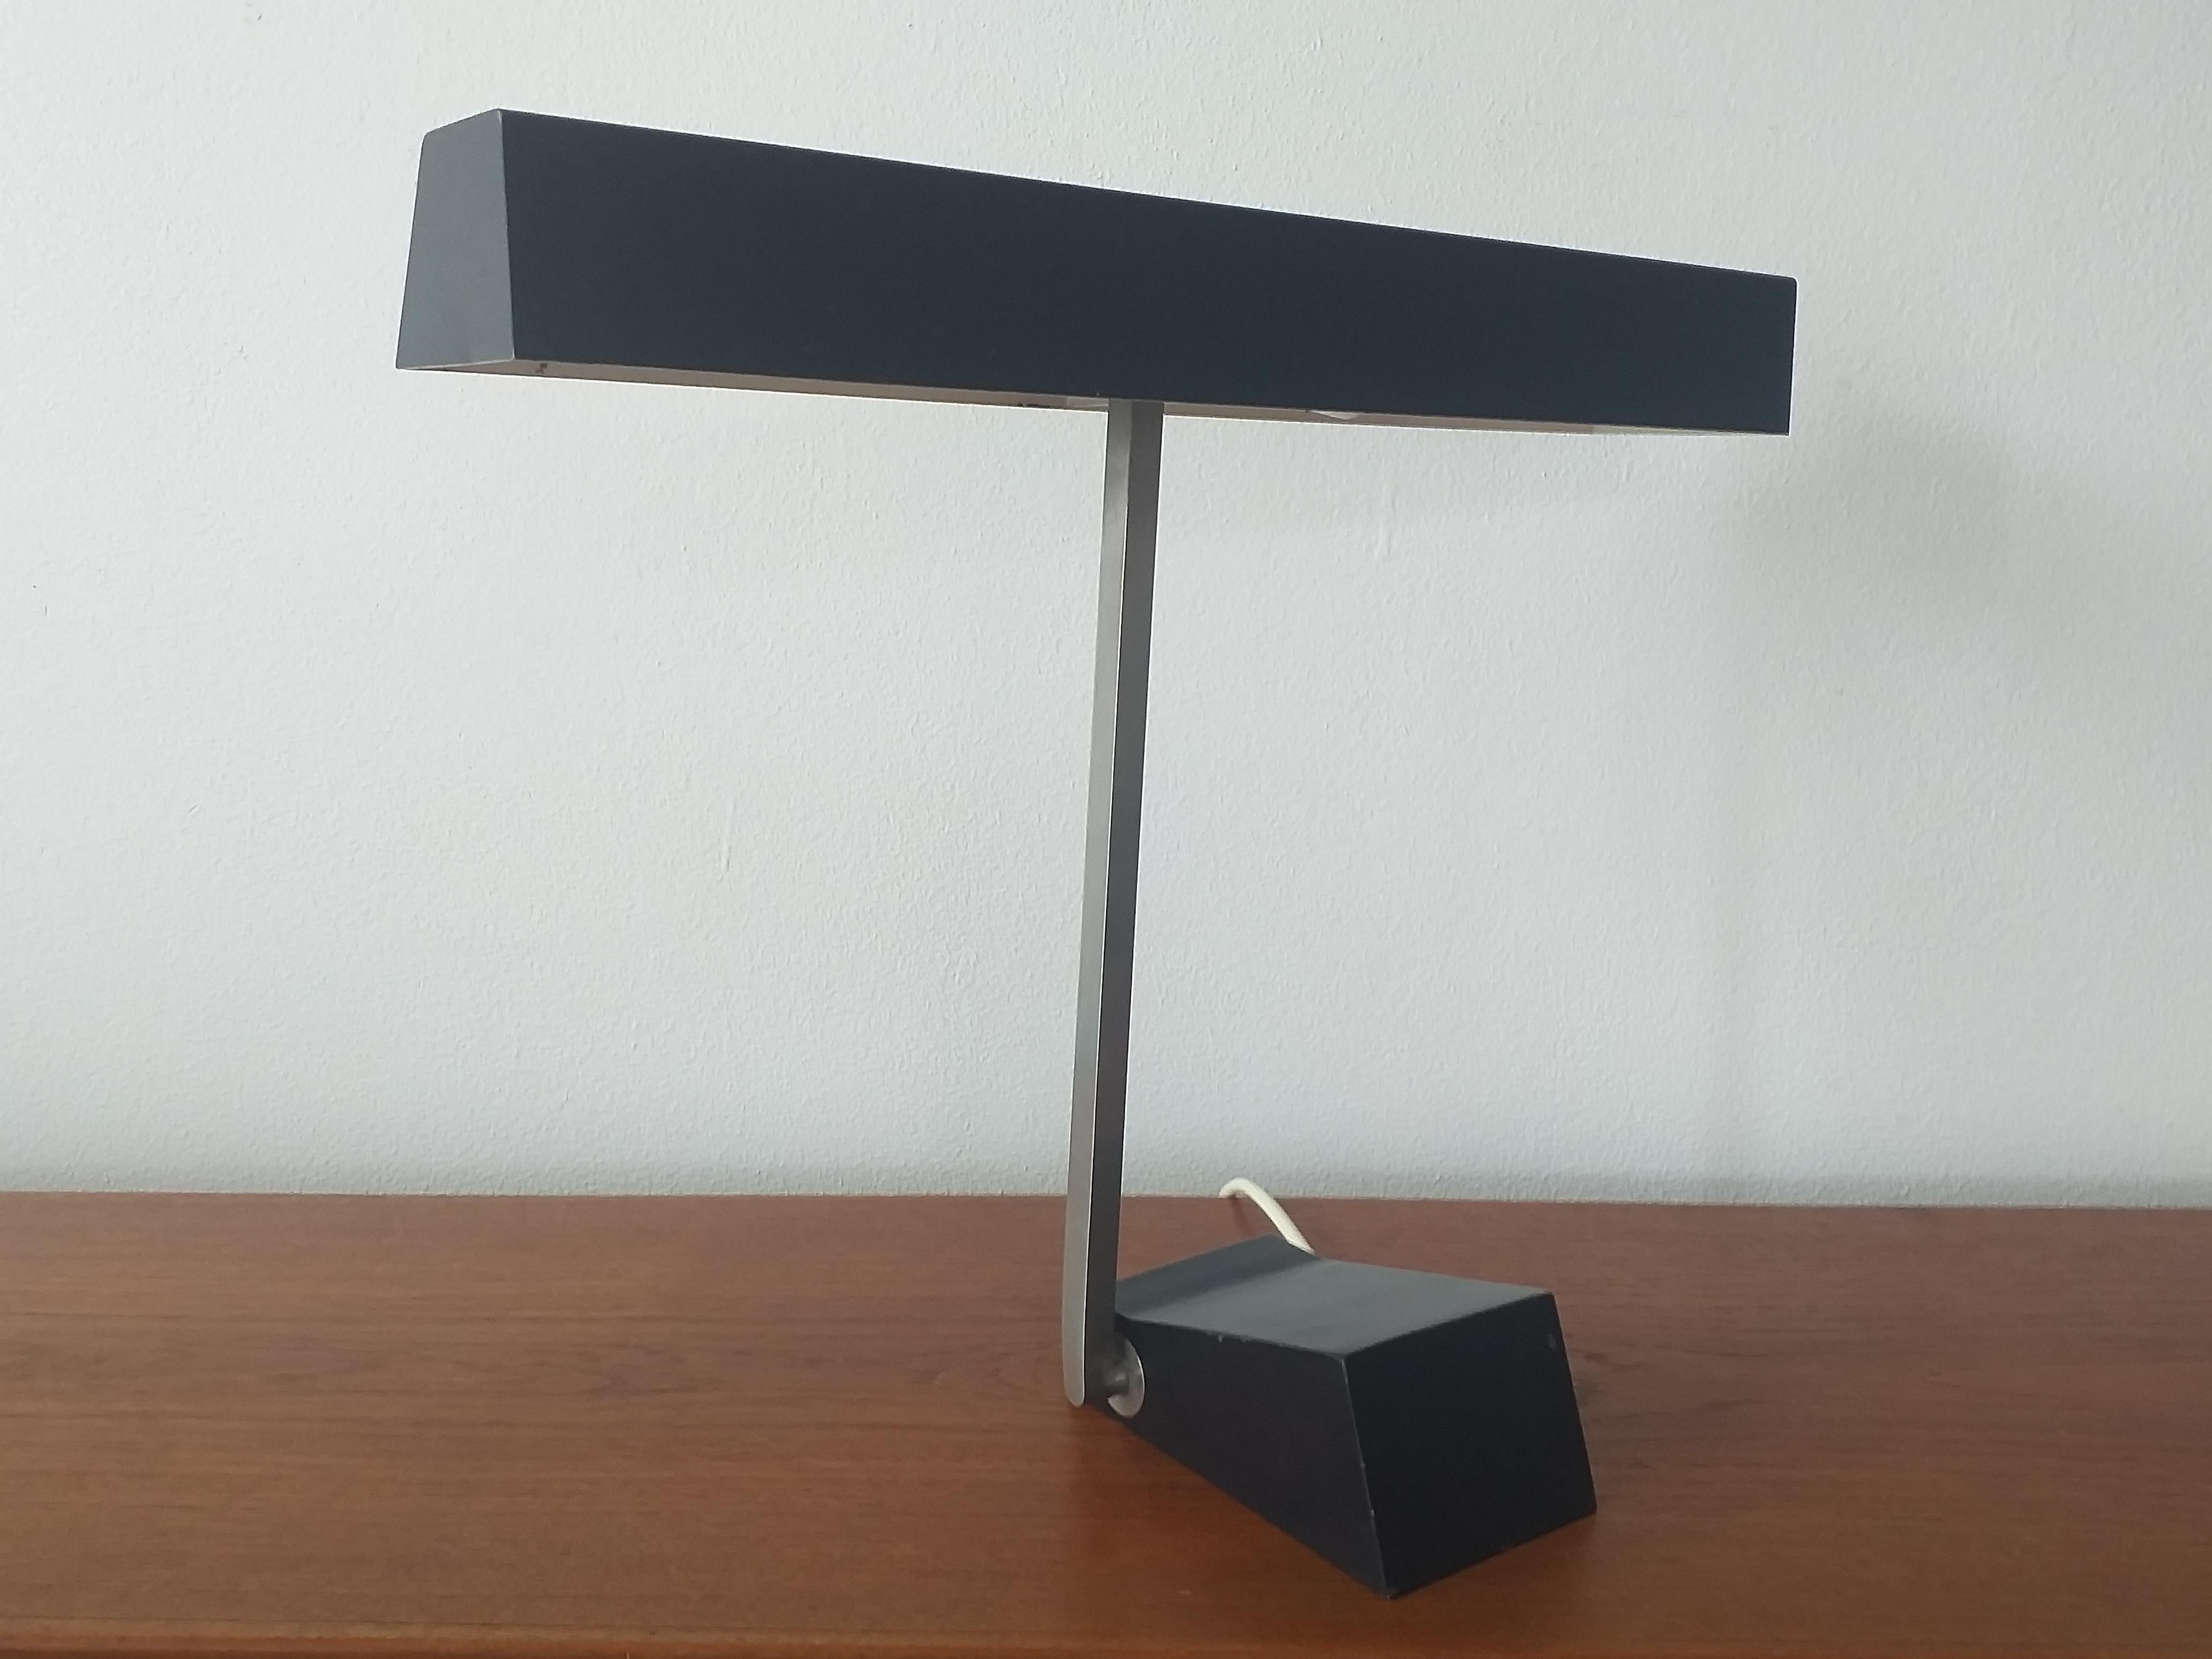 German Midcentury Table Lamp Designed by Heinz Pfaender for Hillebrand, 1960s